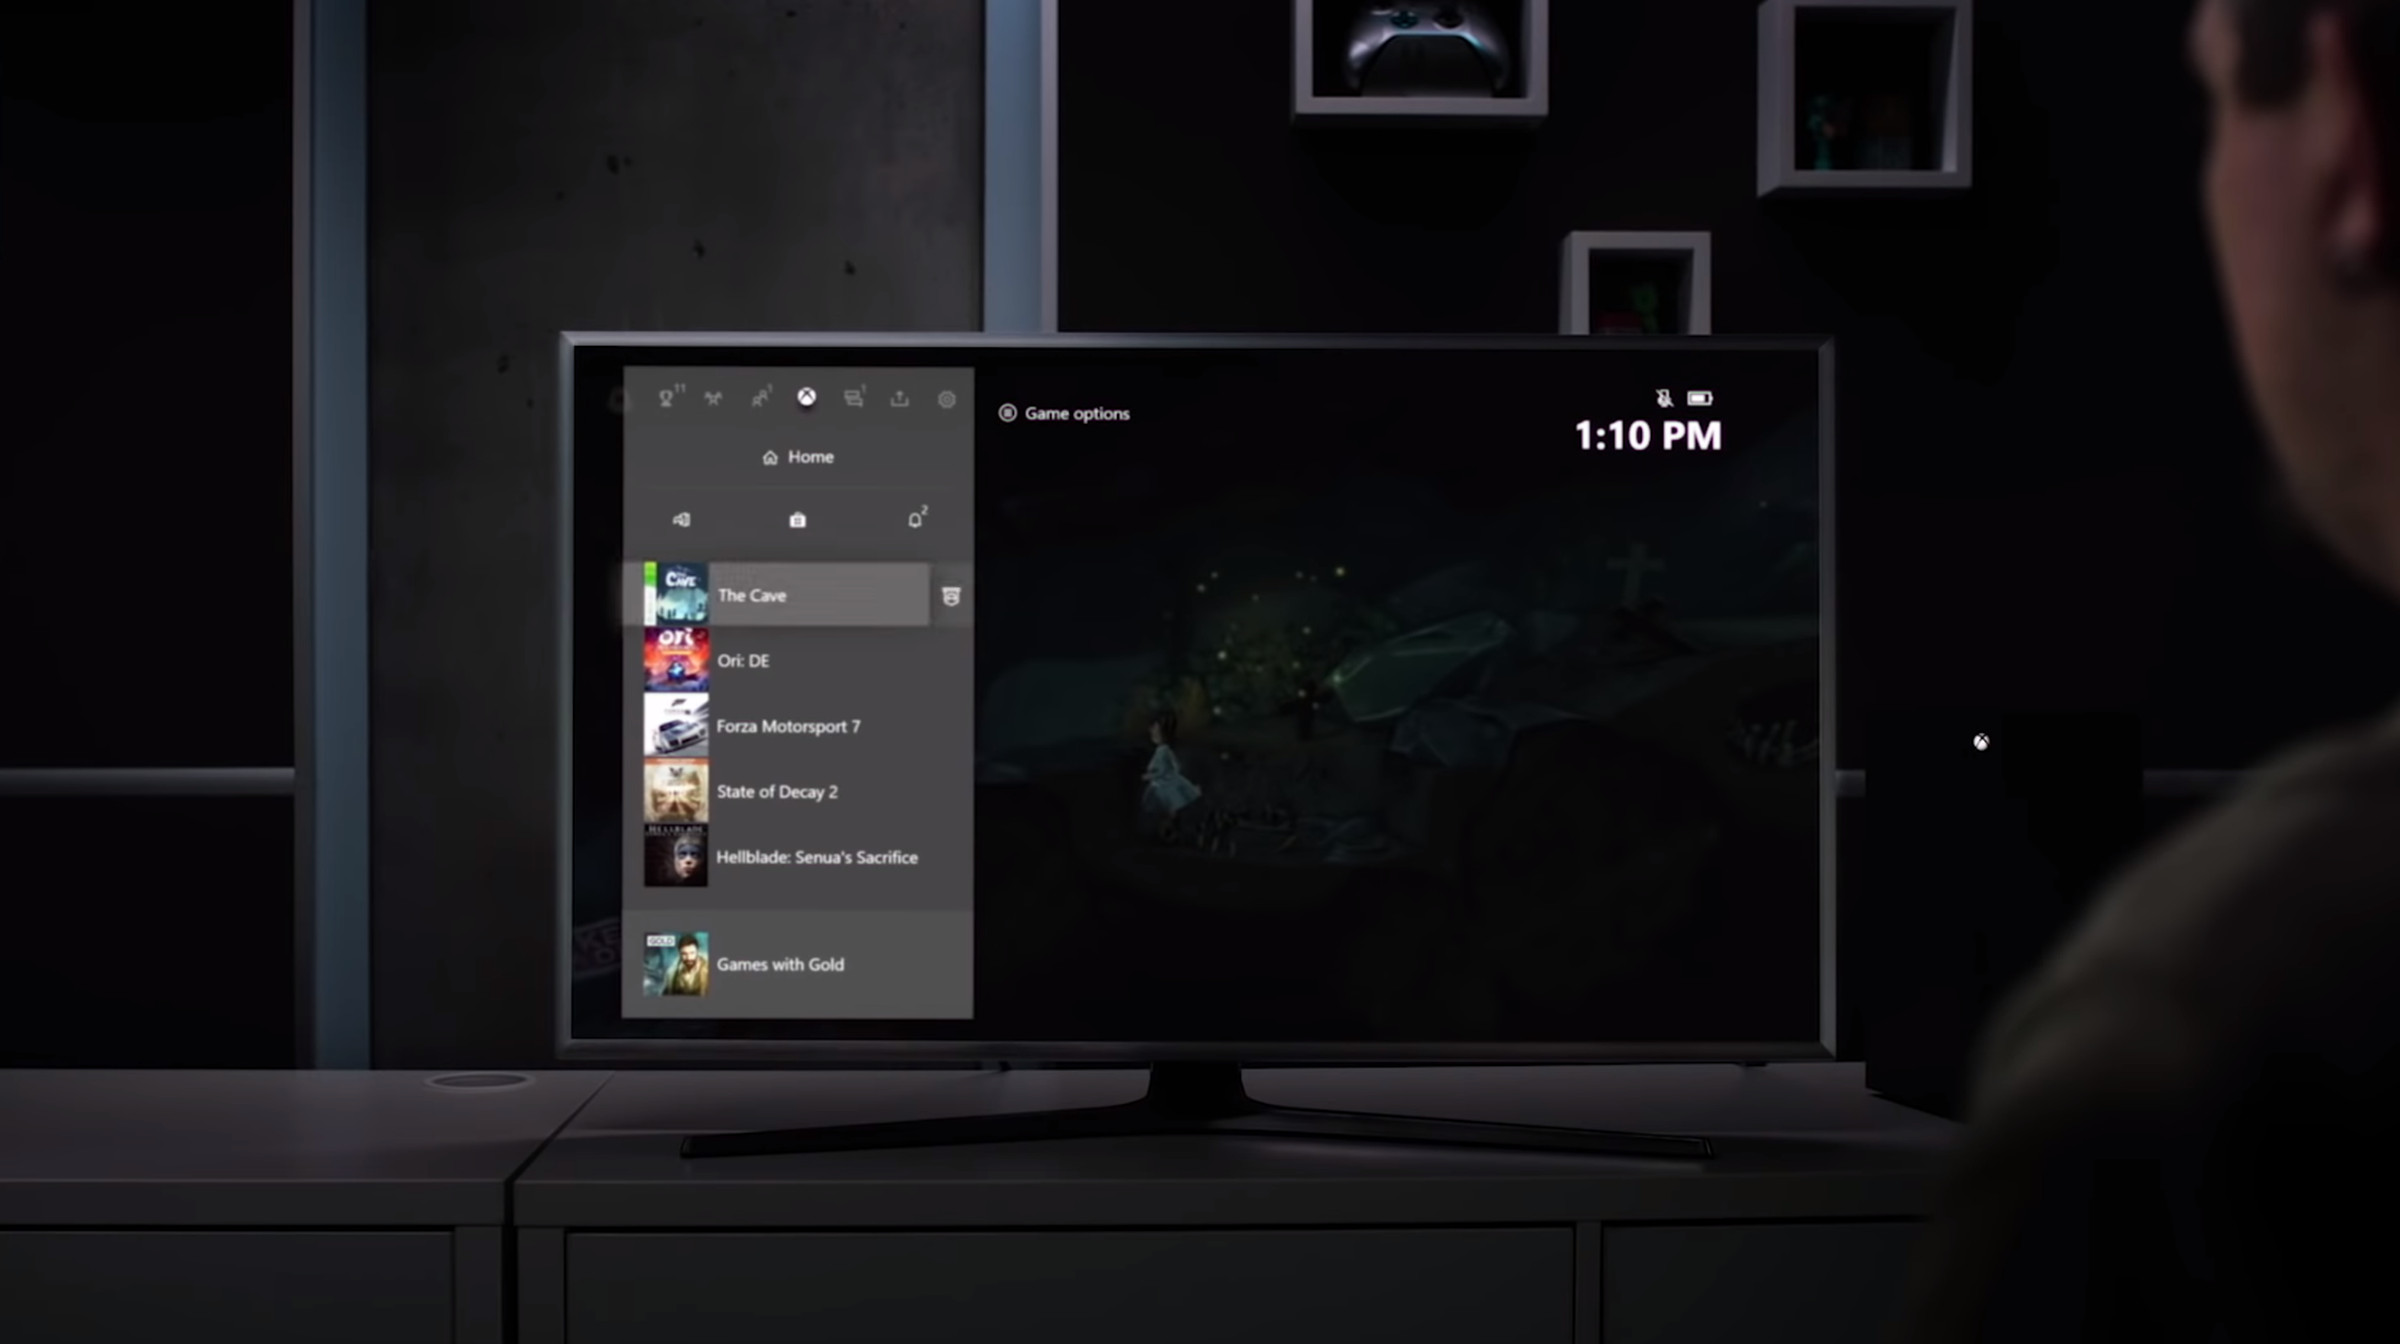 Xbox Series X dashboard in Microsoft’s recent videos.